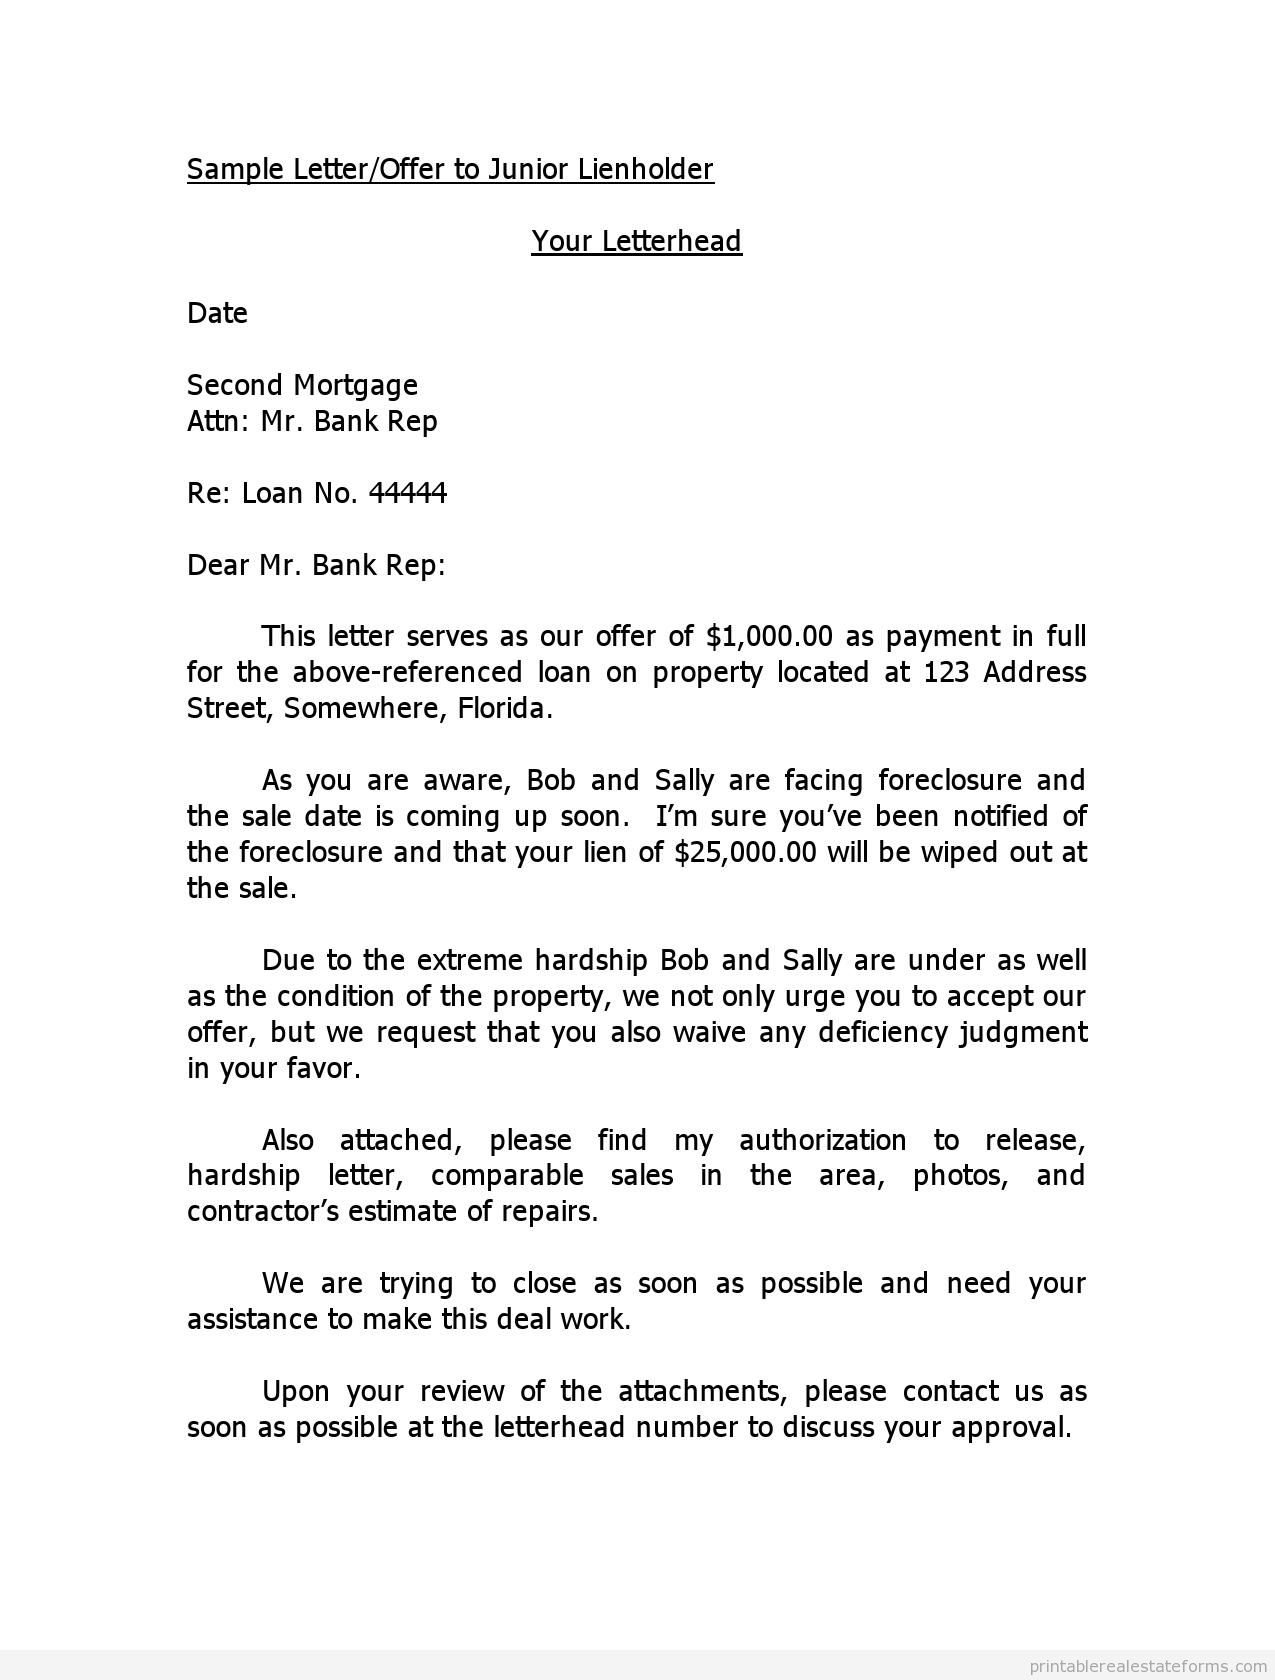 Sample Of Offer Letter For Real Estate (FREE PRINTABLE)